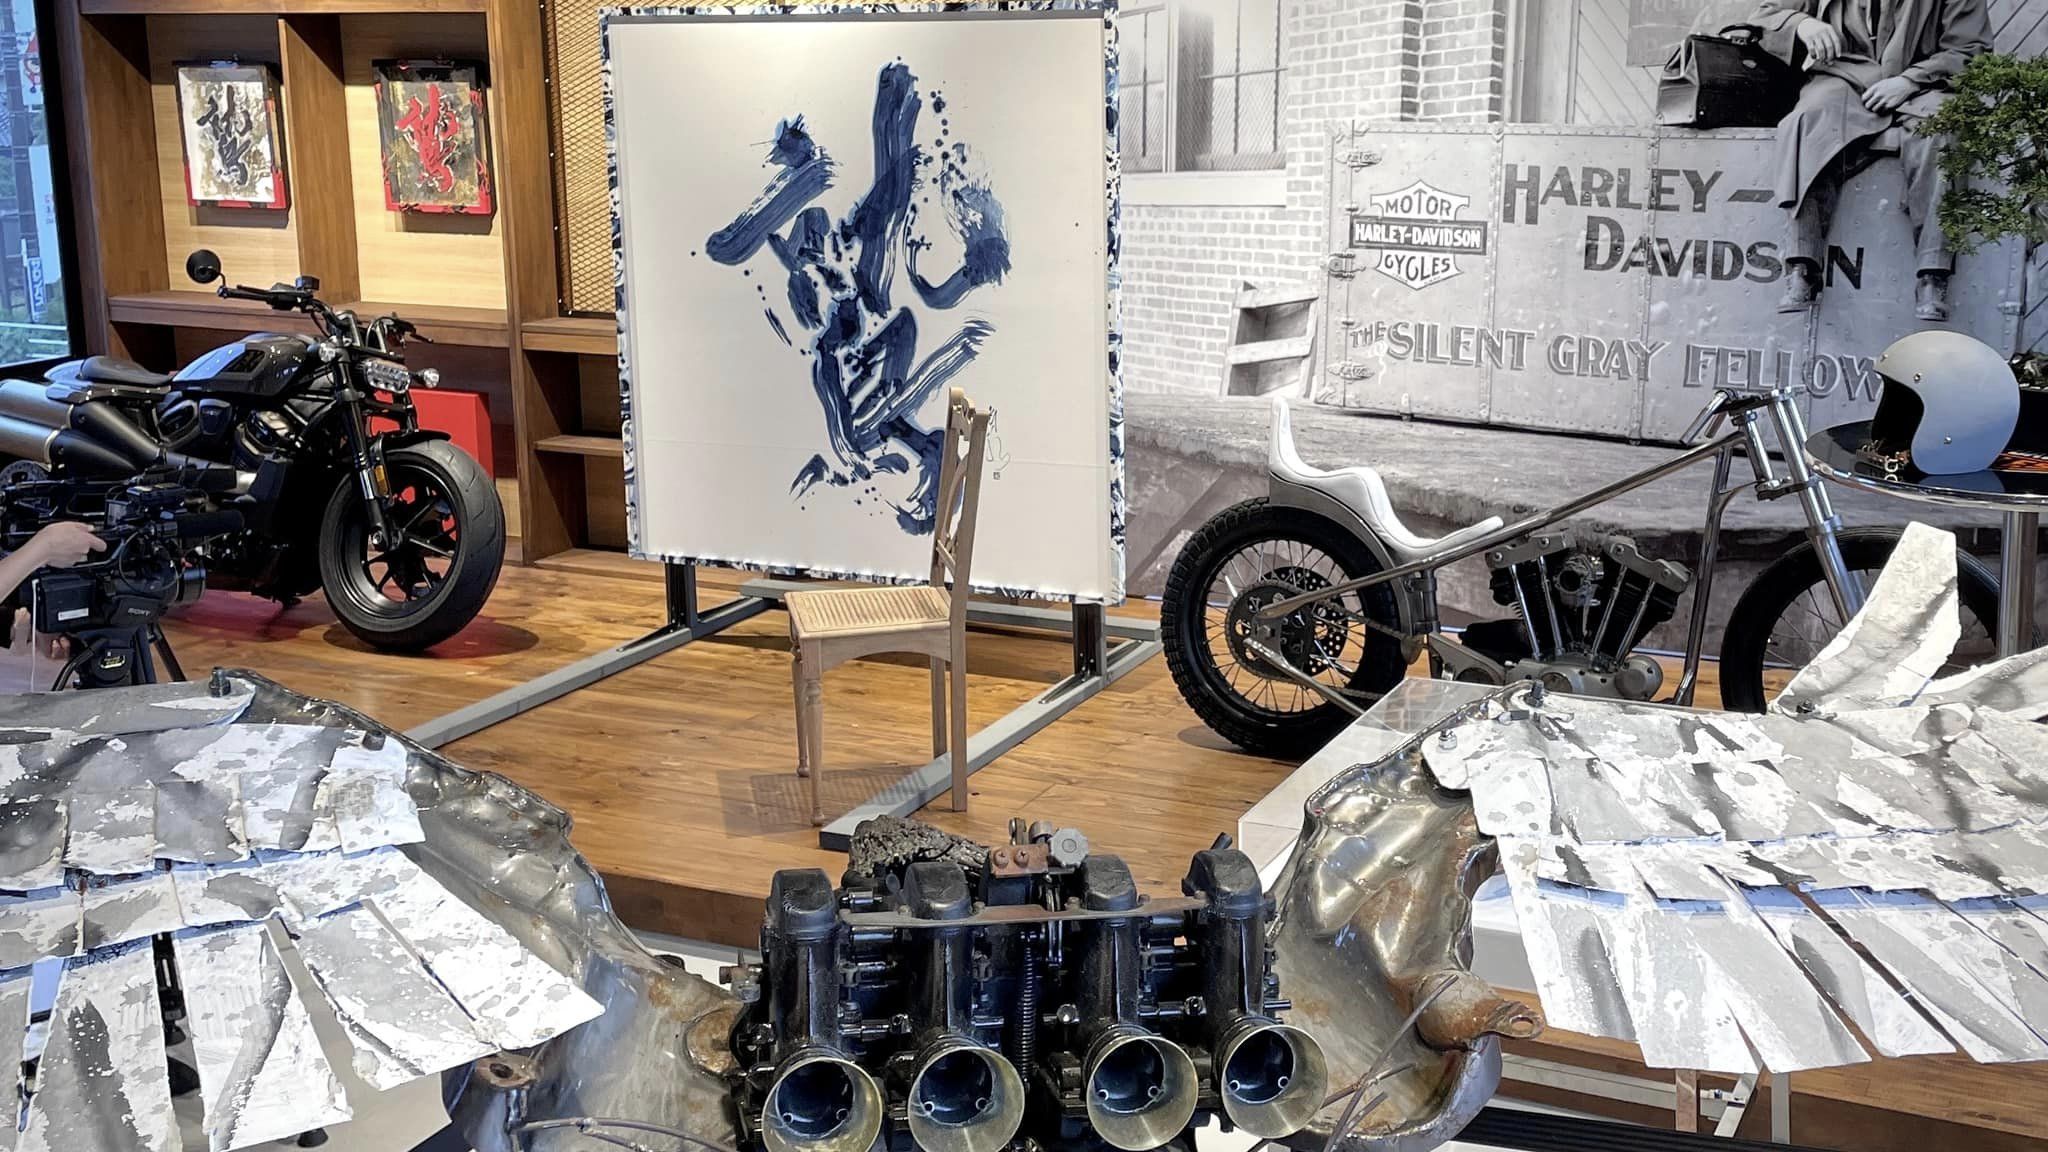 Harley-Davidson SAGA 書道家 アーティスト 山口芳水 展示会 ハーレーダビッドソン